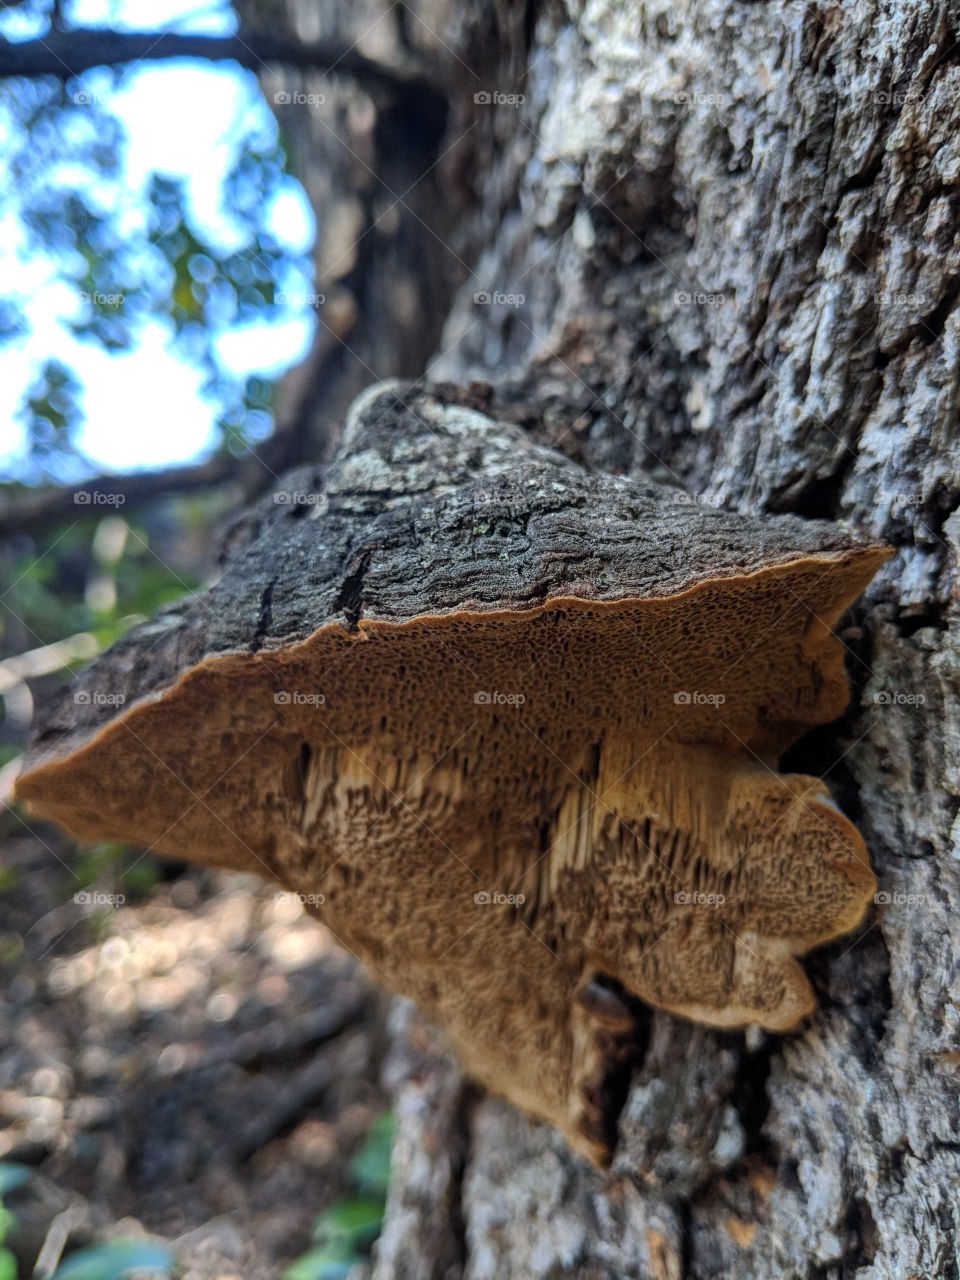 Magnificent polypores mushroom growing alongside the tree bark